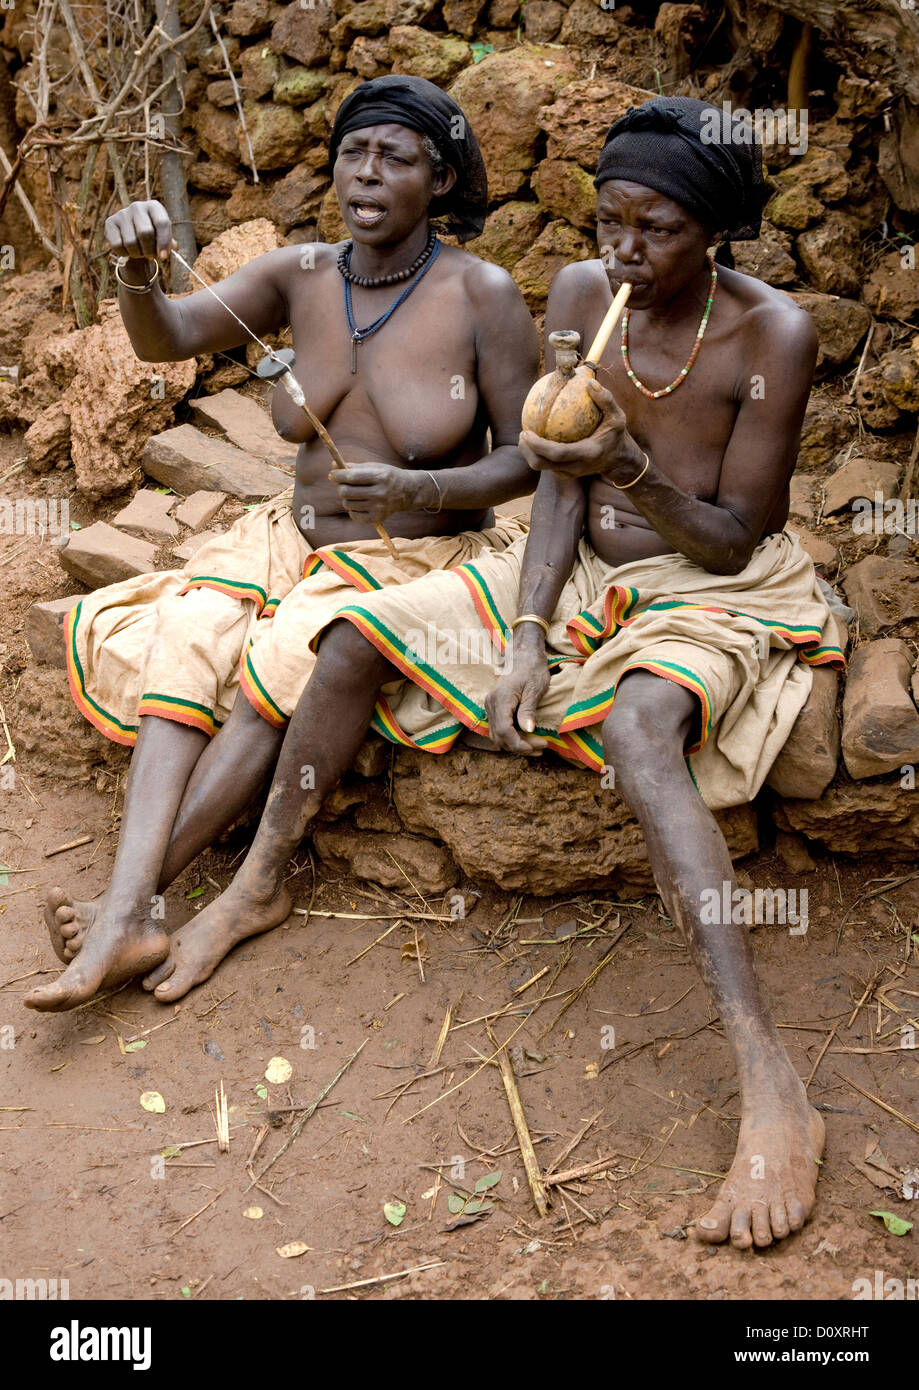 Tribe women naked